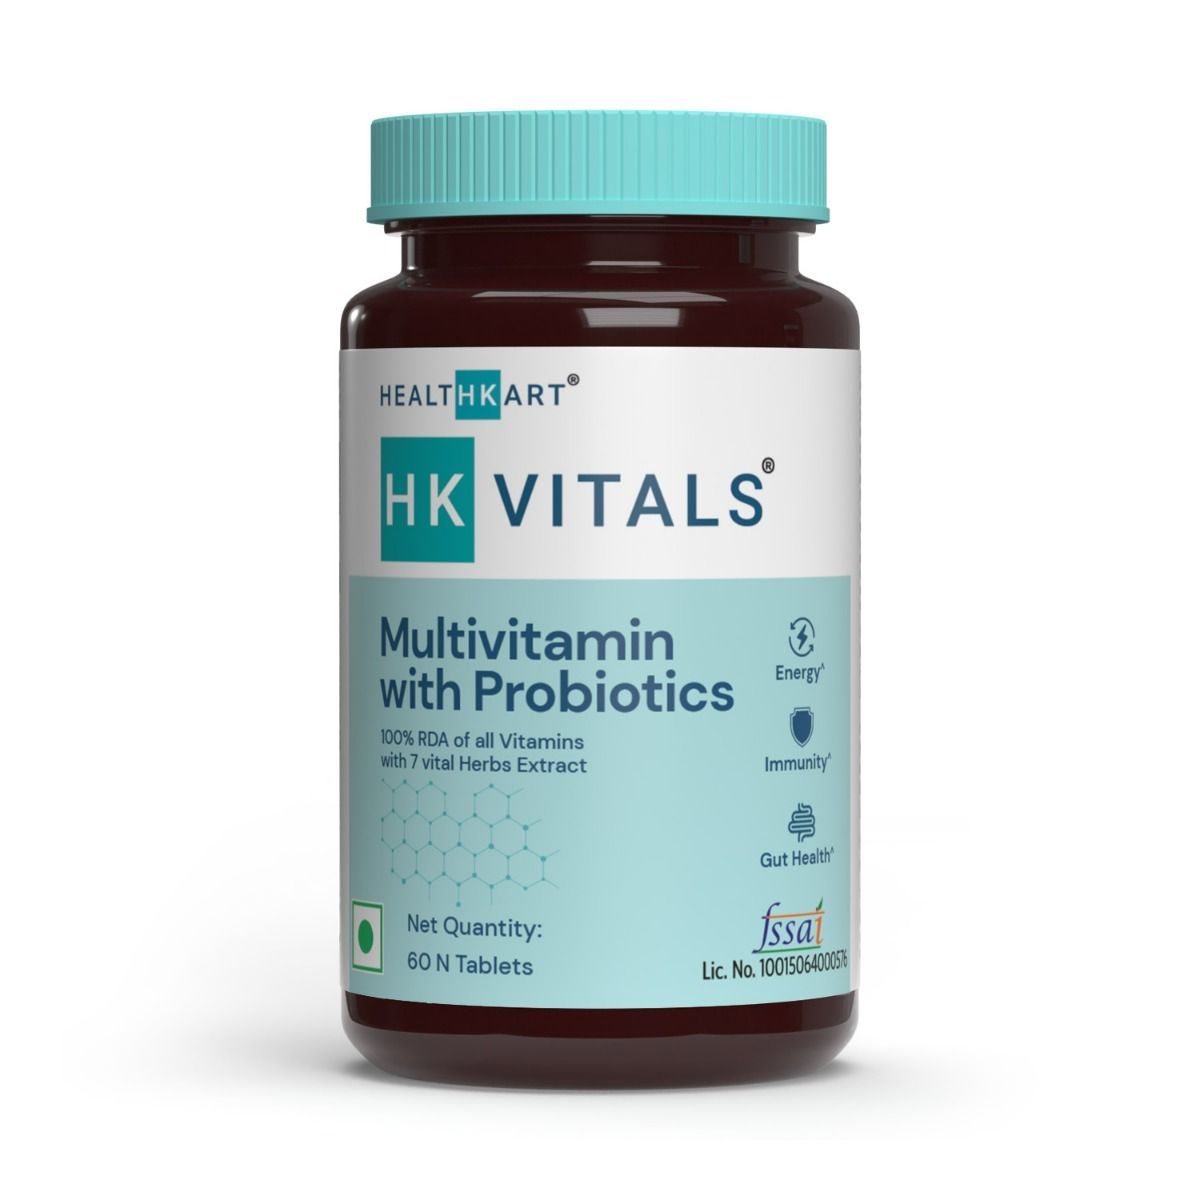 Buy HealthKart HK Vitals Multivitamin with Probiotics, 60 tablets Online